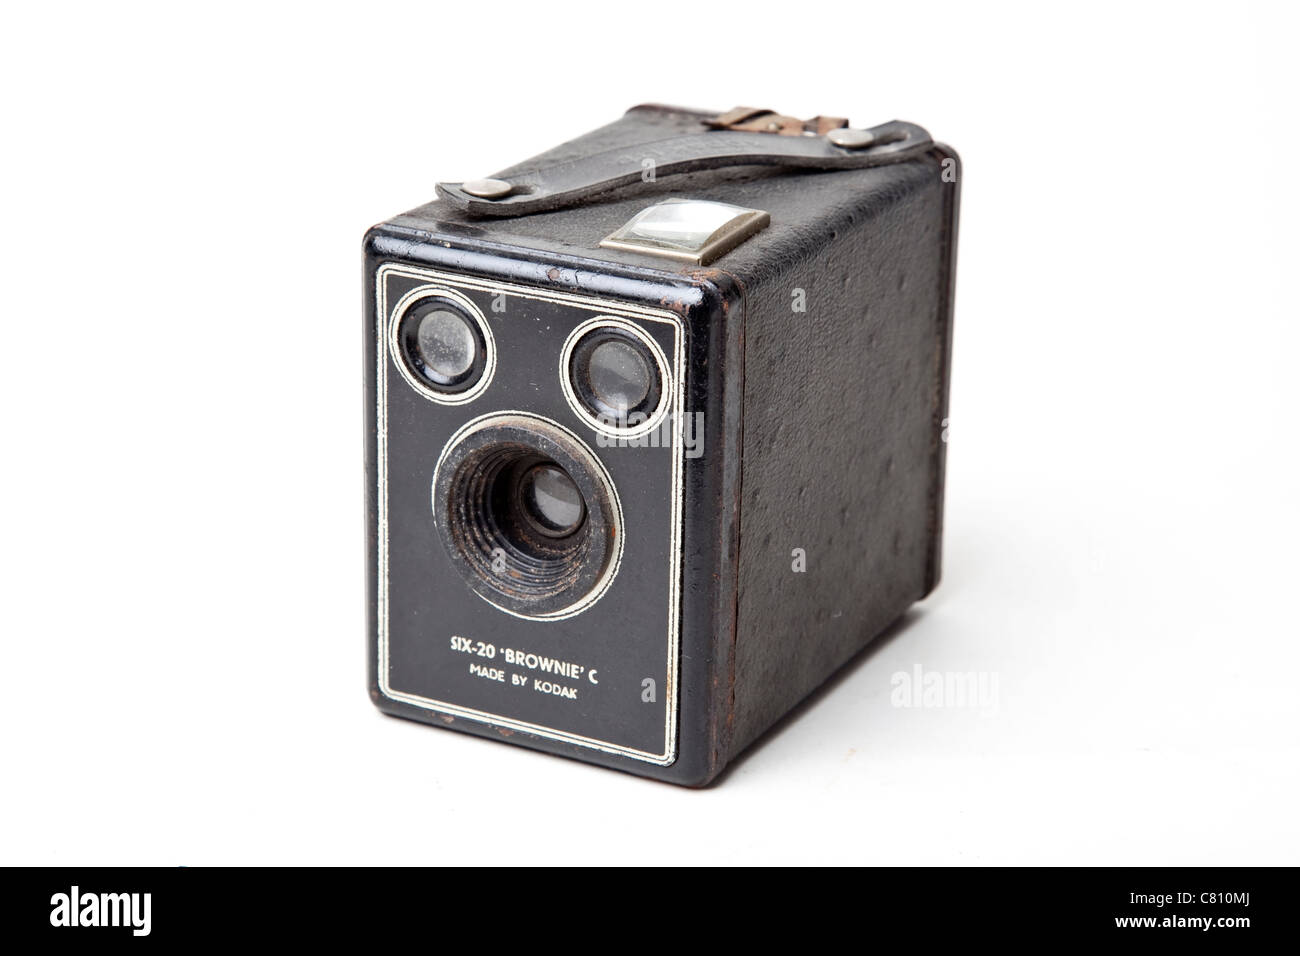 Old Kodak box brownie camera Stock Photo - Alamy